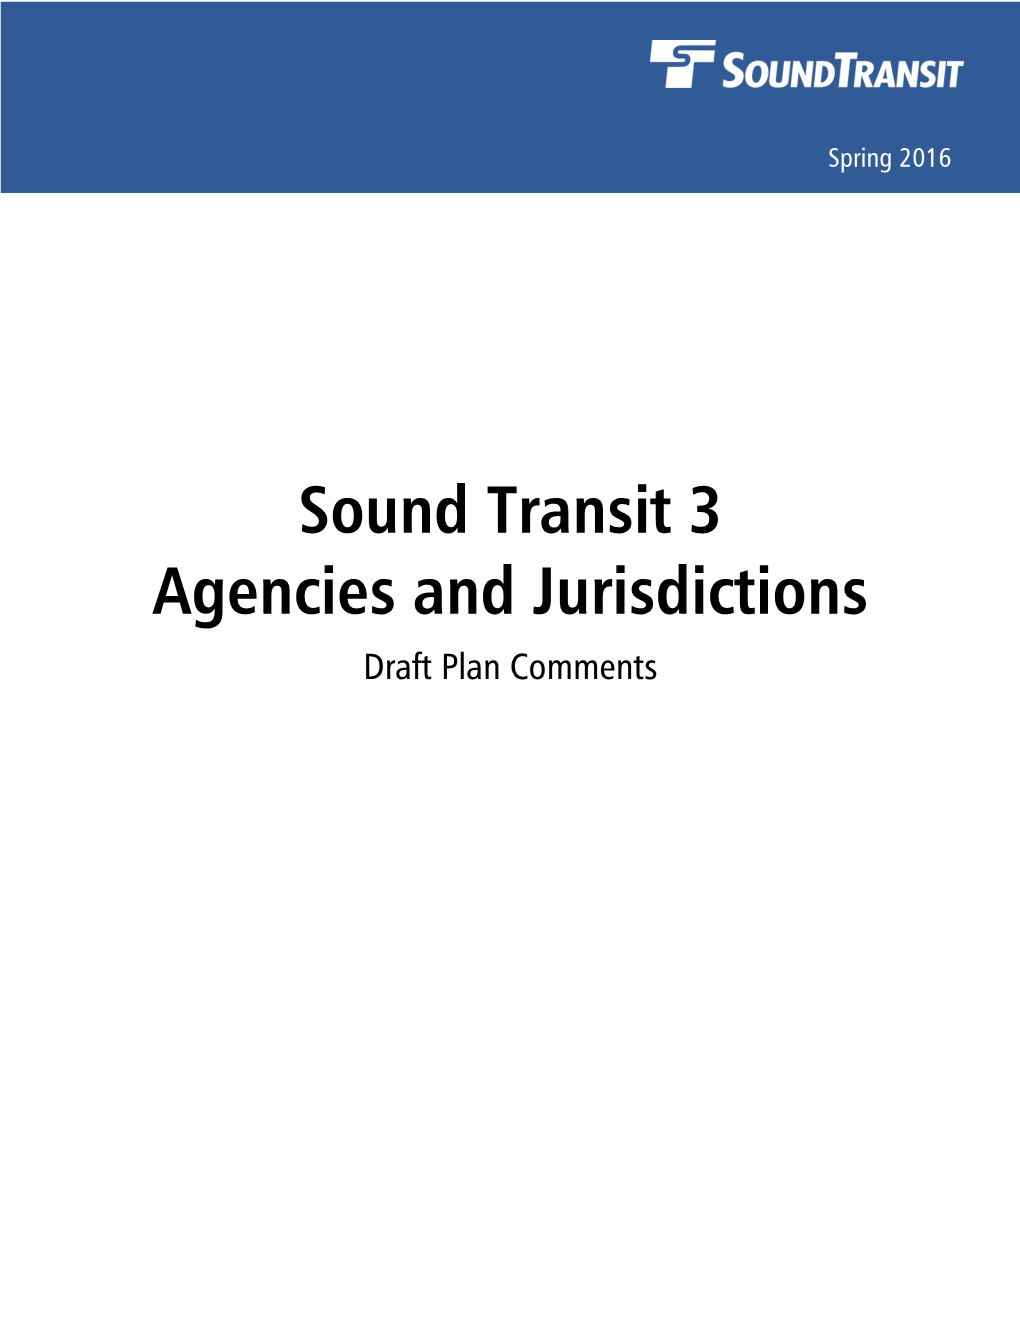 Sound Transit 3 Agencies and Jurisdictions